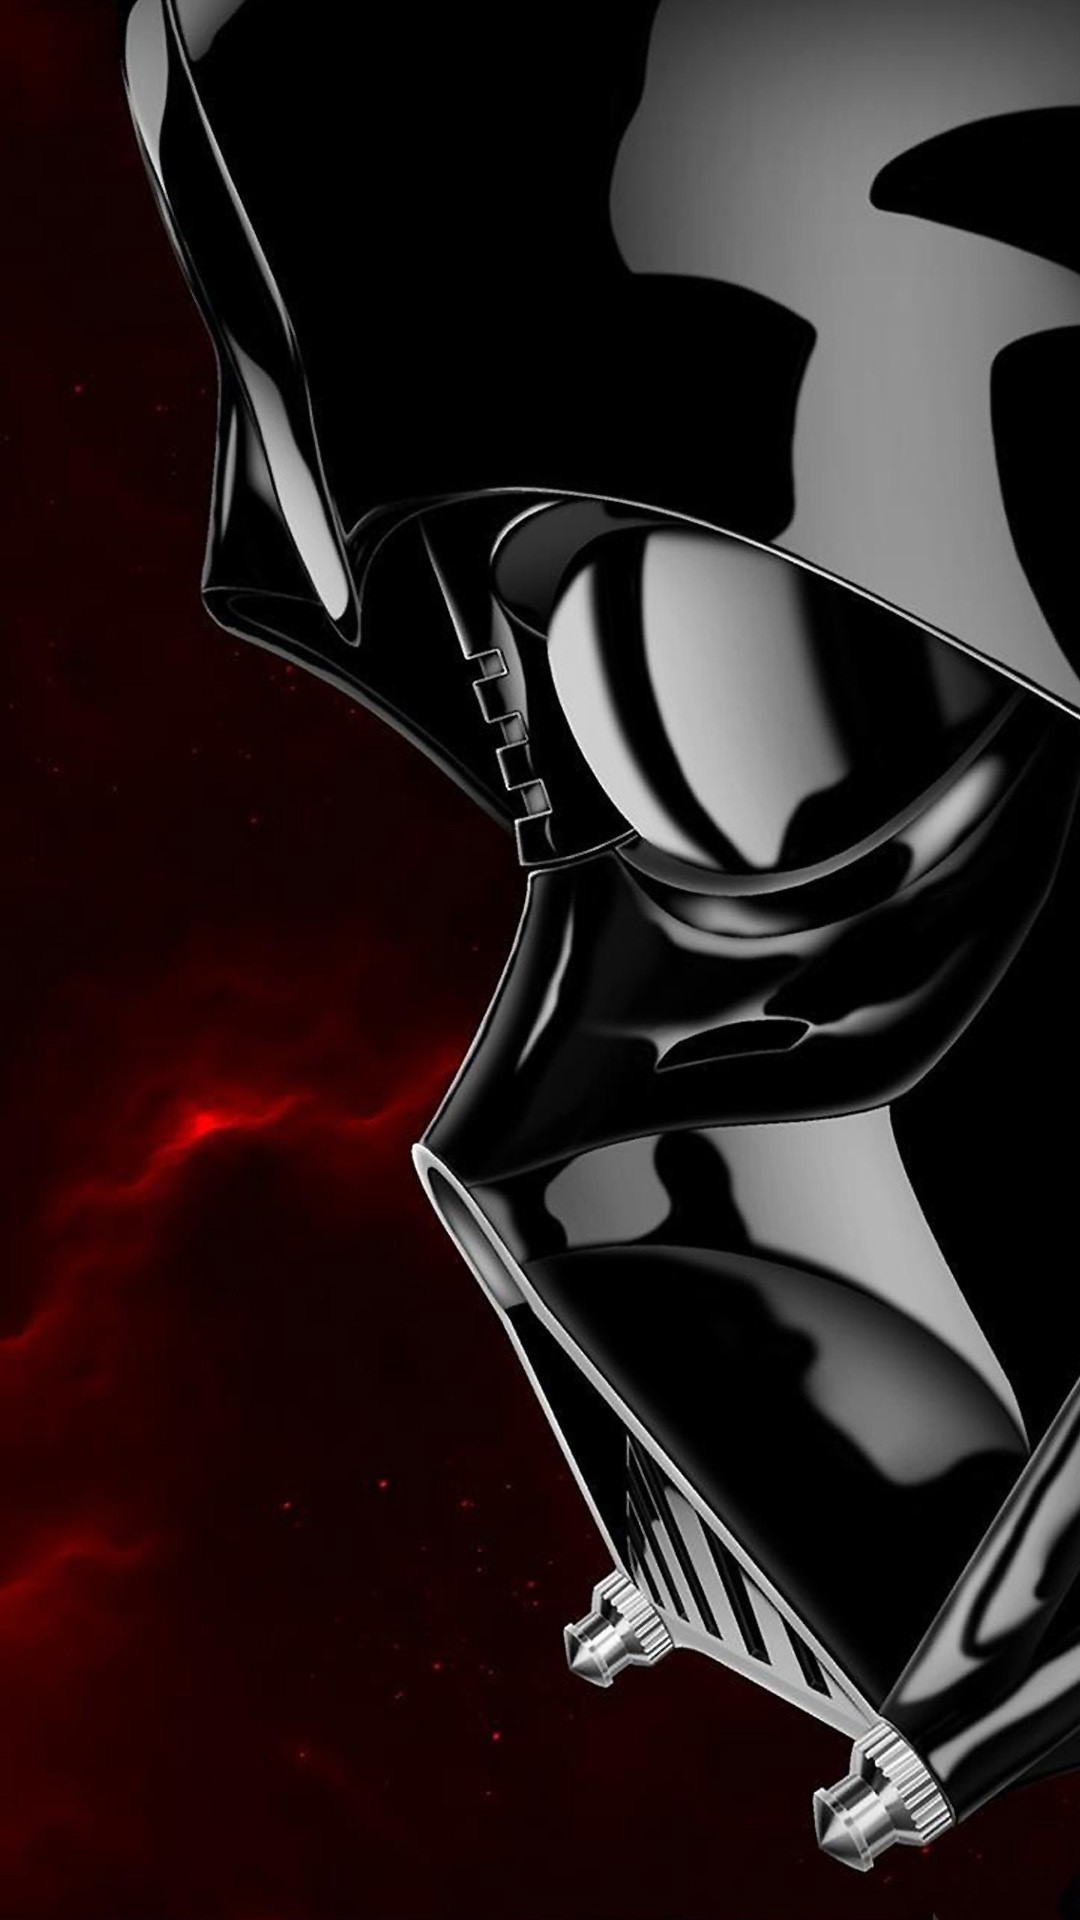 Darth Vader Star Wars Illustration Android Wallpaper free download